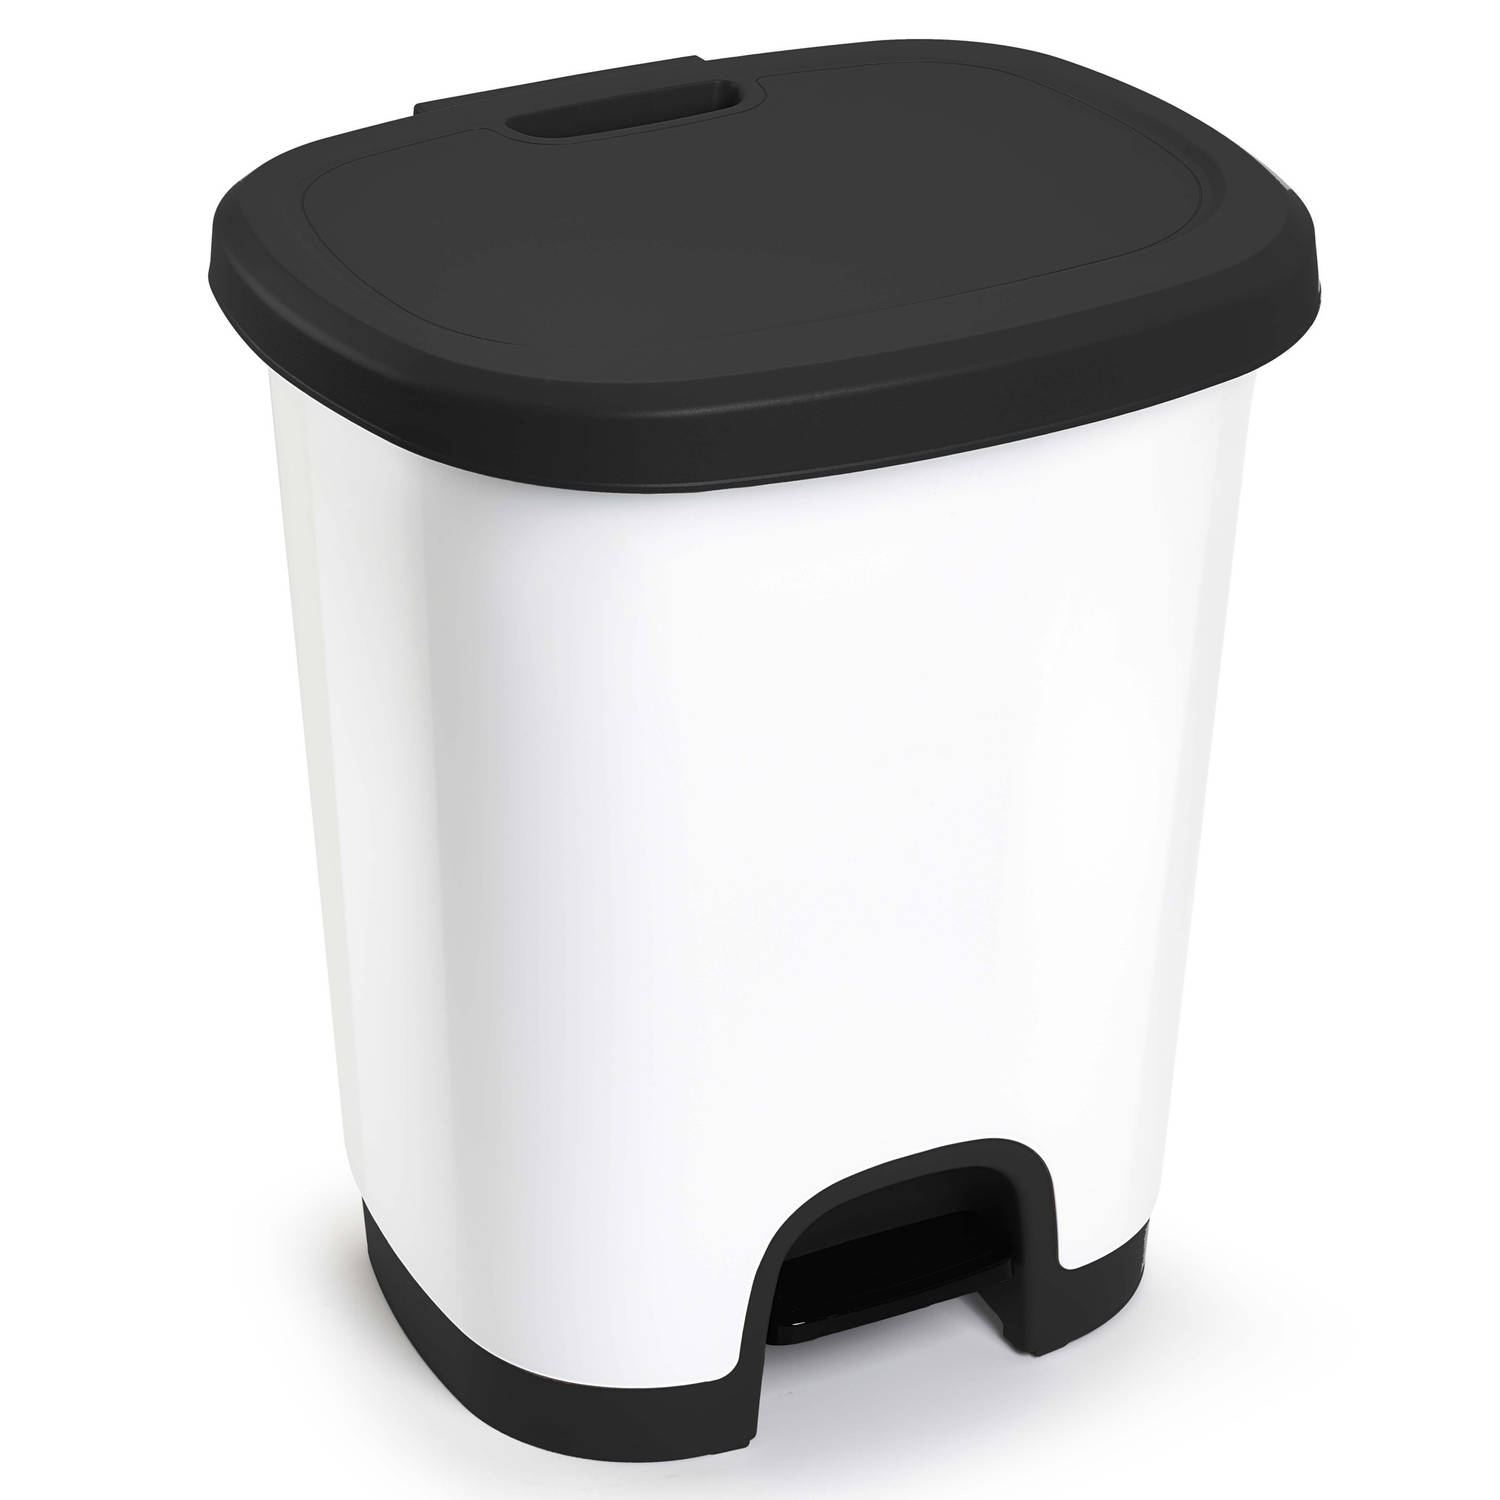 Afvalemmer/vuilnisemmer/pedaalemmer 18 liter in het wit/zwart met deksel en pedaal - Pedaalemmers